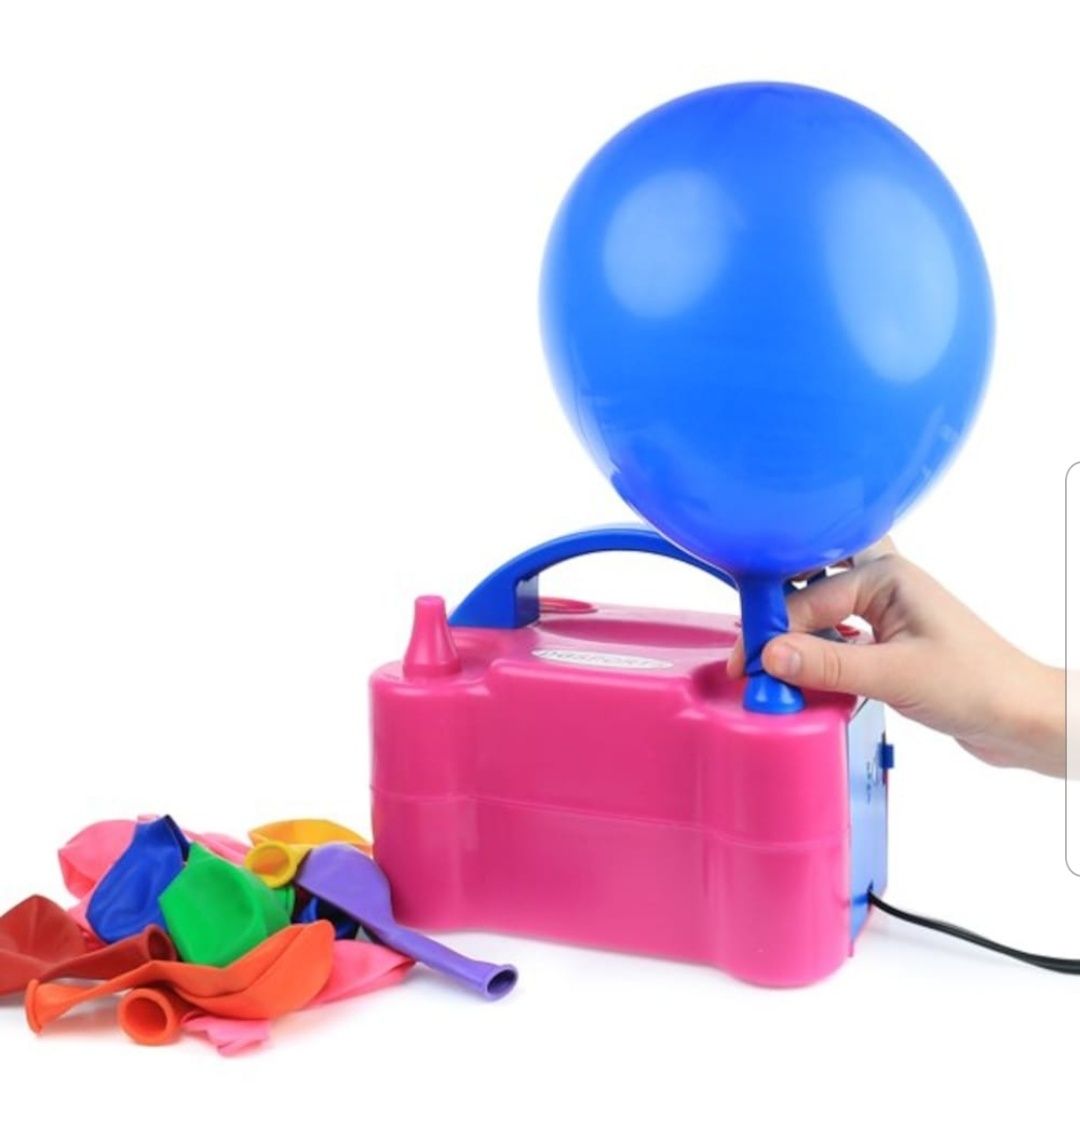 Pompa compresor profesional electric ROZ pentru umflat baloane